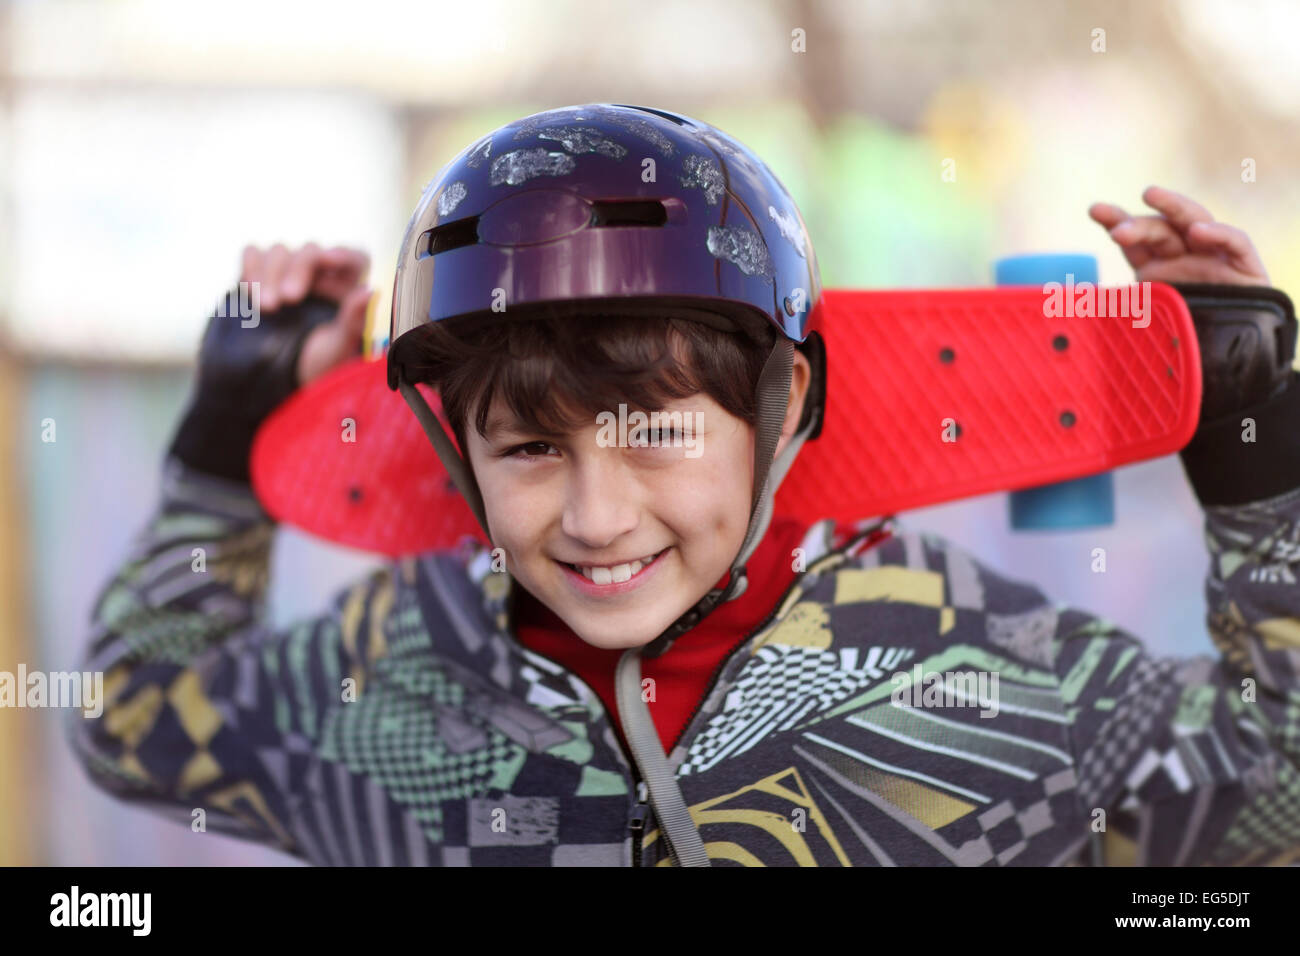 Young boy in skateboard helmet Stock Photo